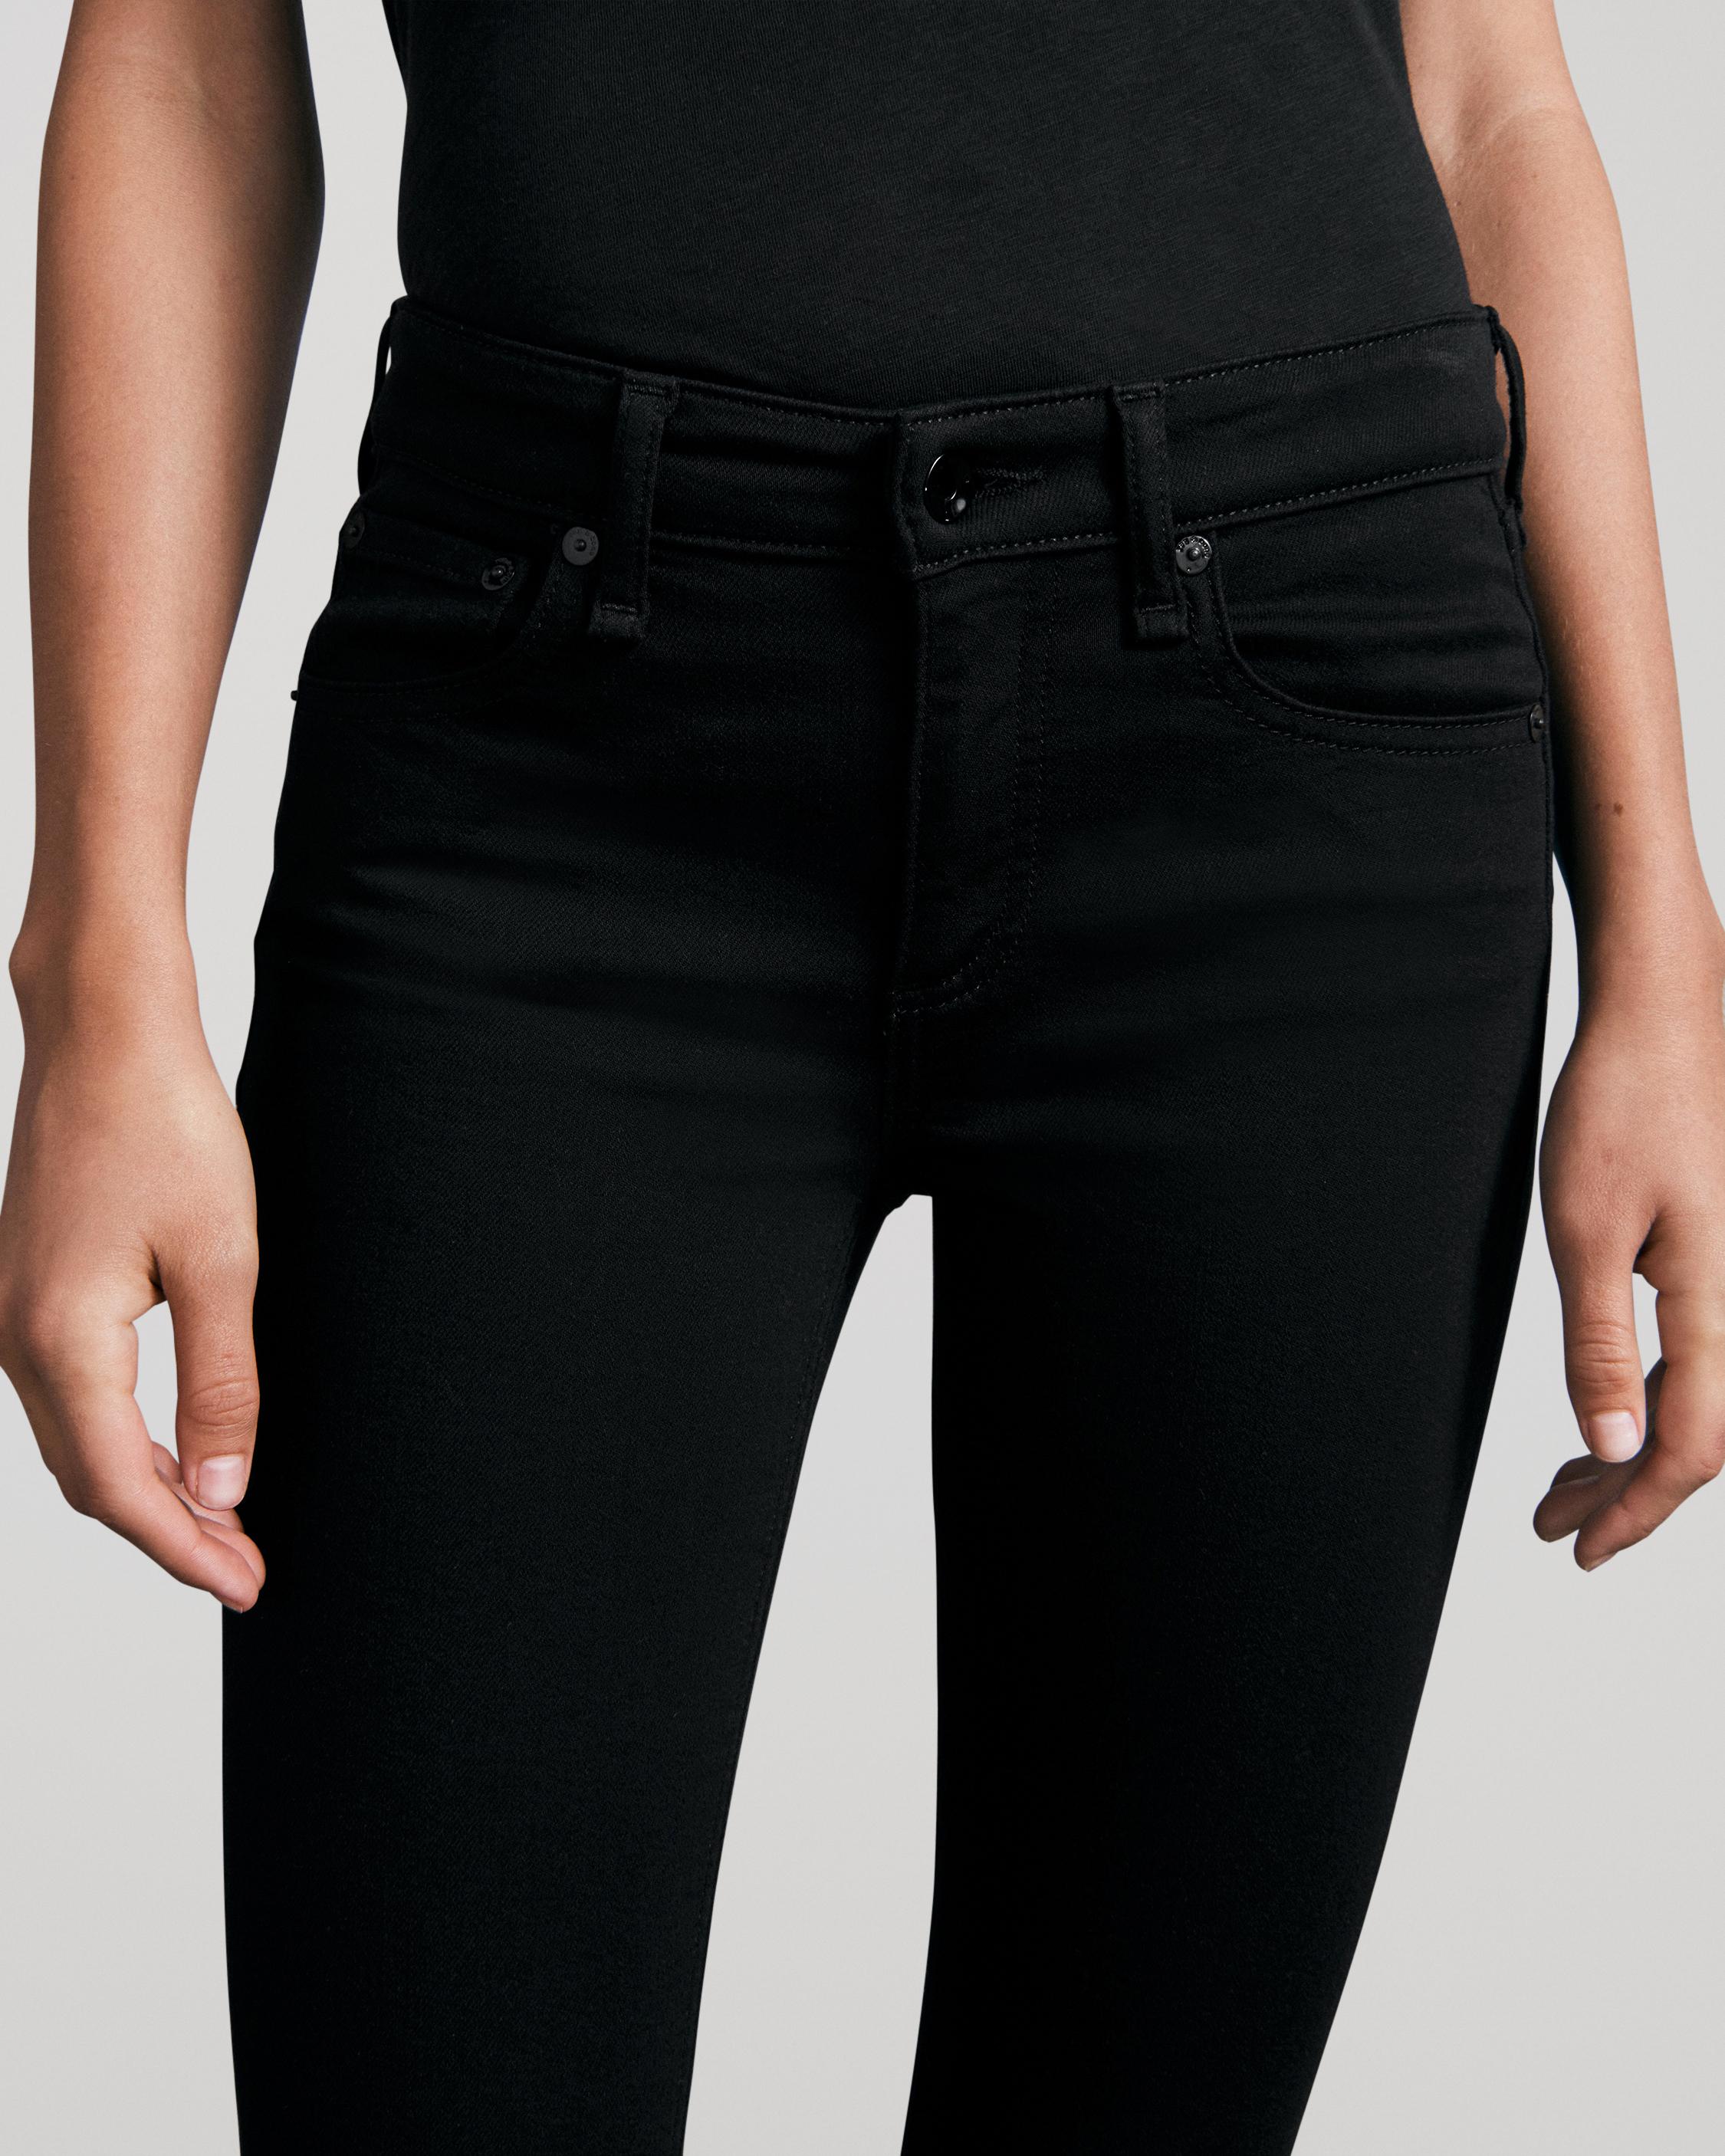 Chanel 2021 Skinny Leg Jeans - Black, 10.25 Rise Jeans, Clothing